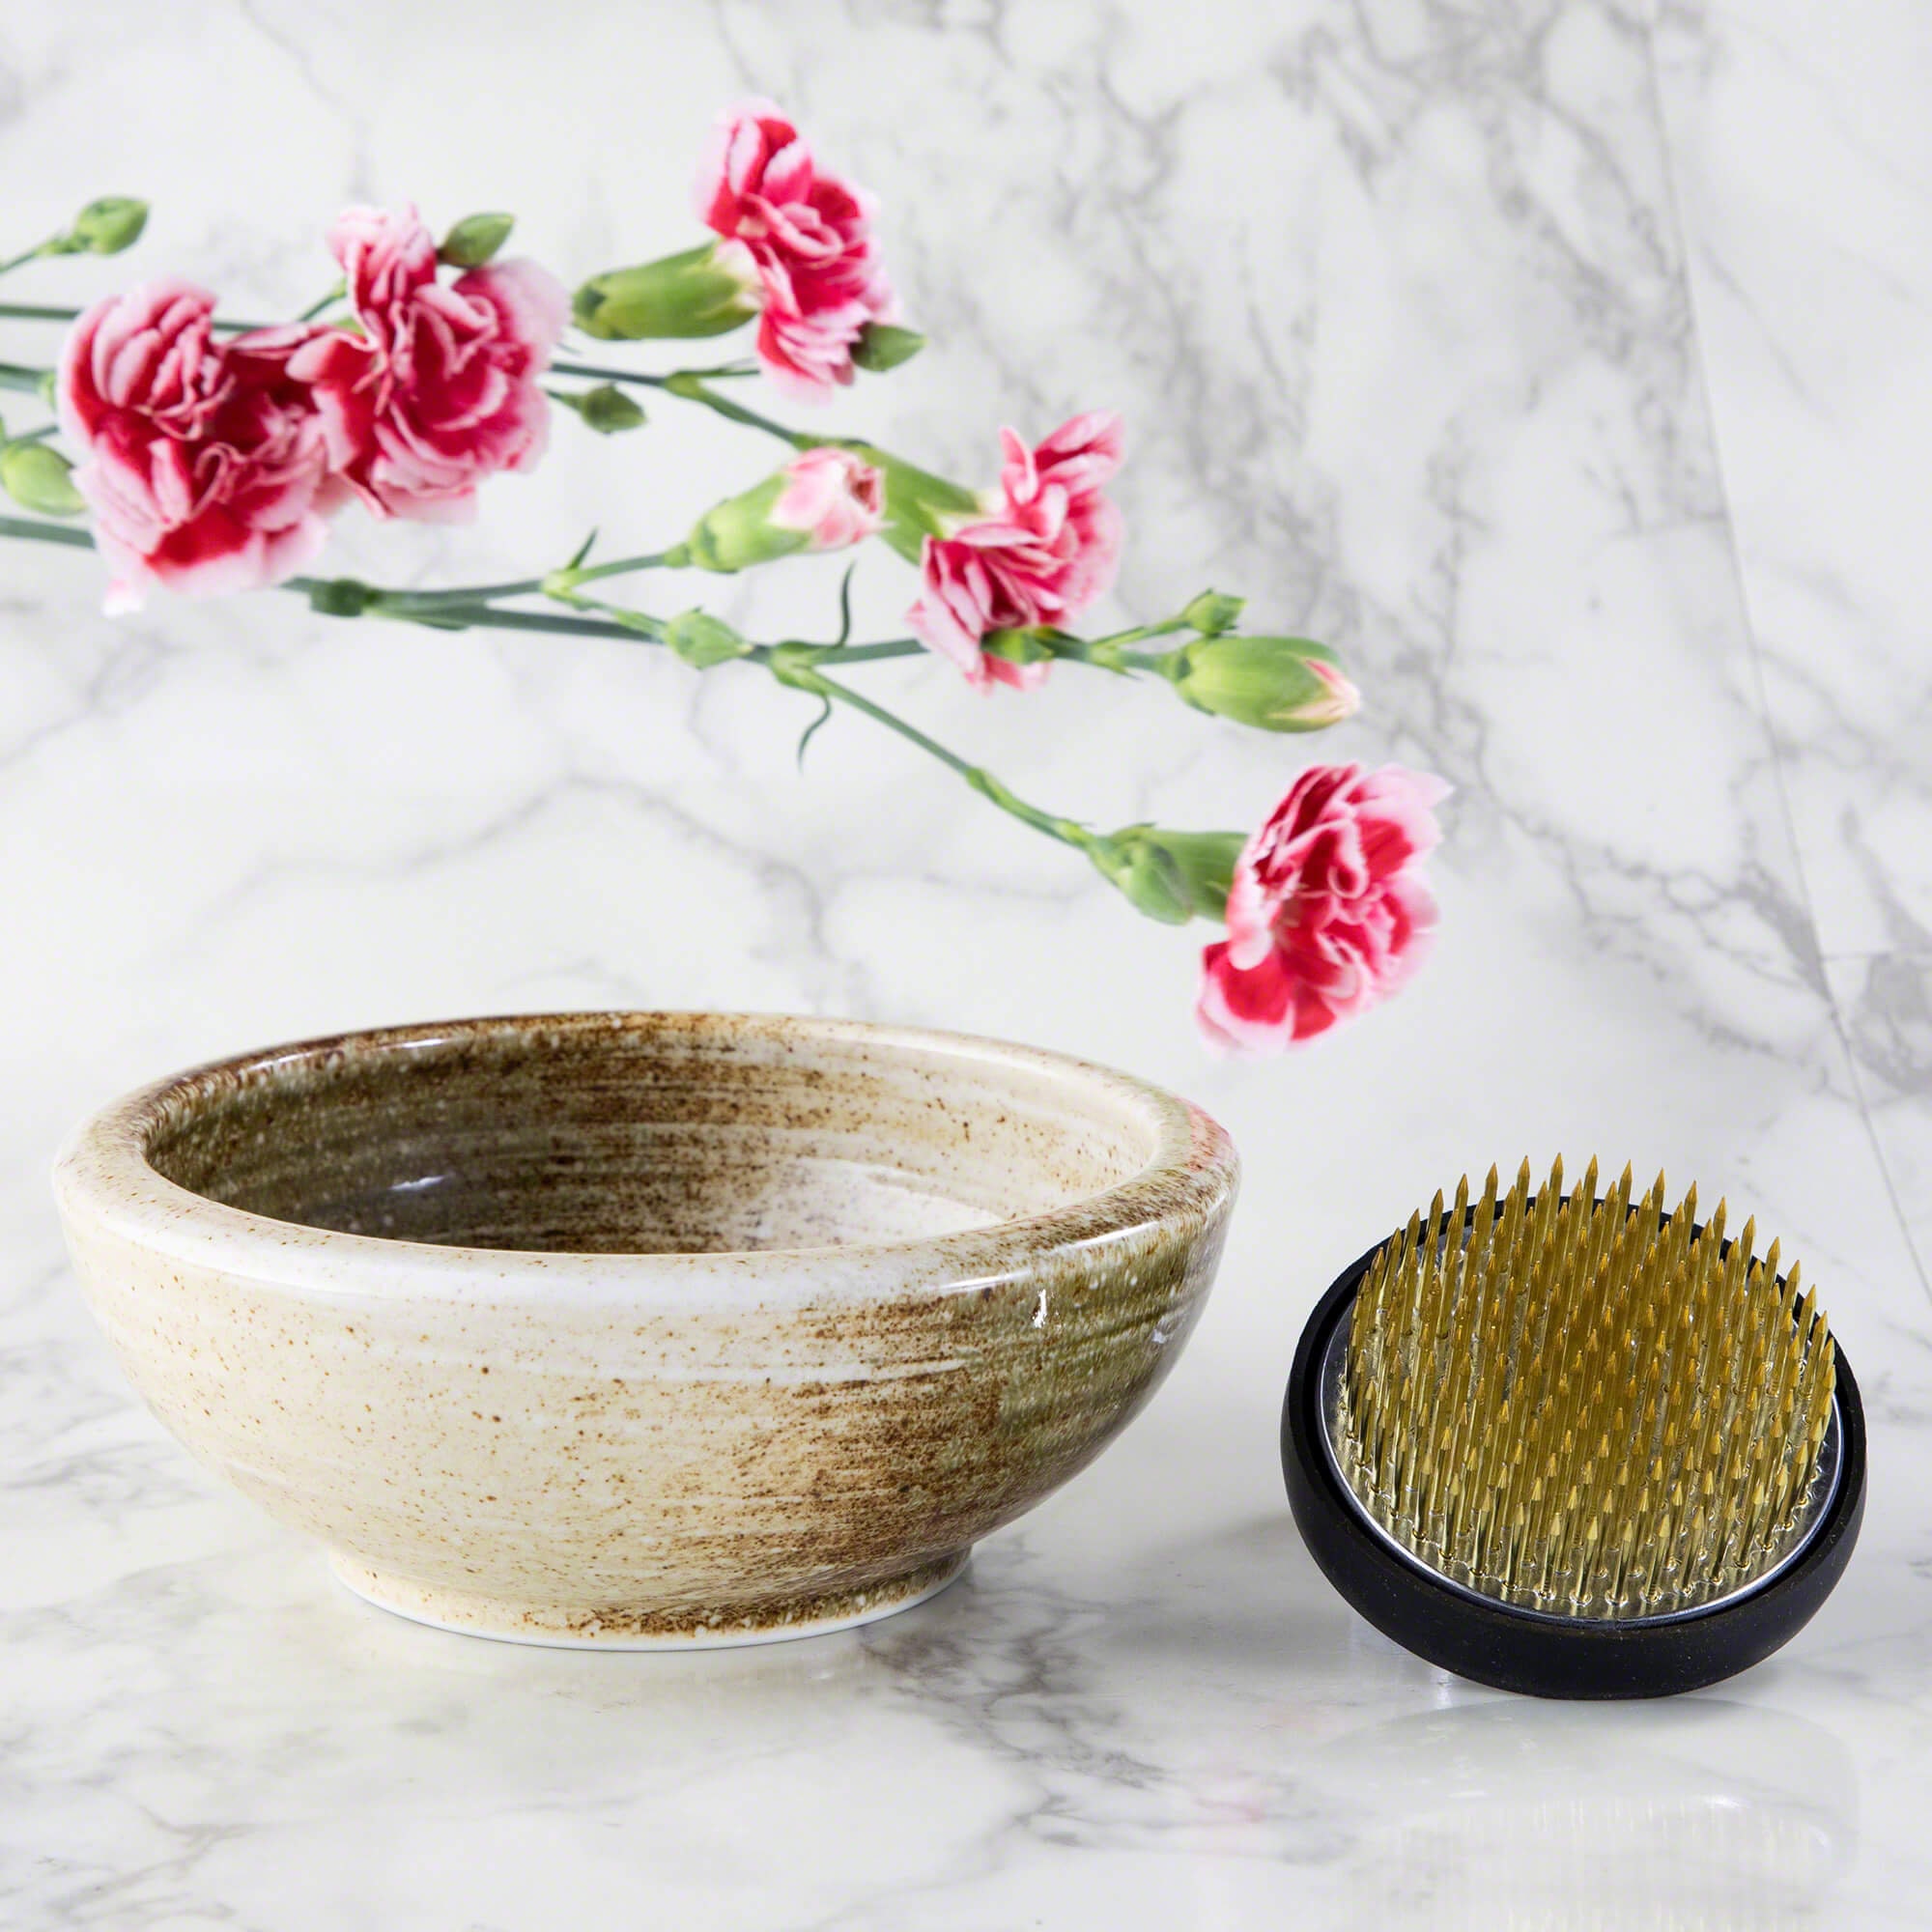 3 Colors Kenzan/flower Frog/flower Arrangement/japanese Ikebana/vintage  Flower Vase/flower Holder/flower Bowl/ceramics Vase/ikebana Vase 